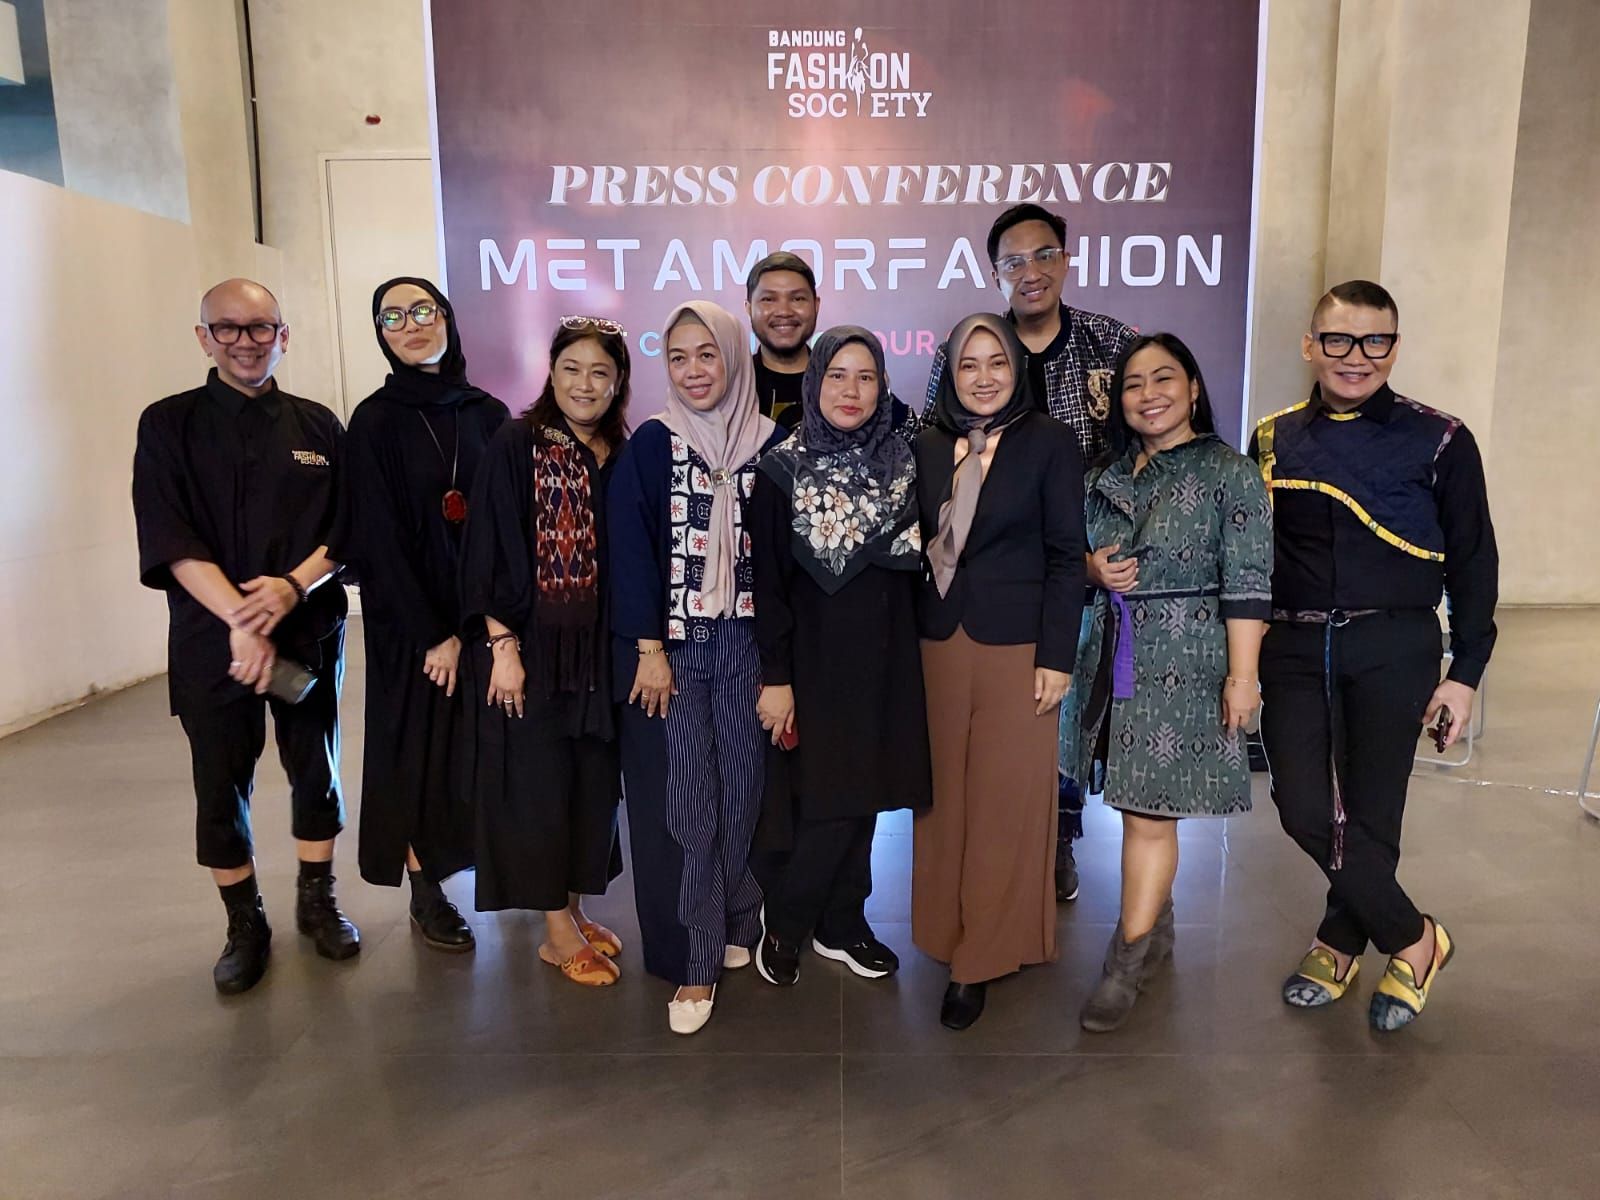 Bandung Fashion Society Siap Menggelar Metamorfashion, Usung Tren Fashion Baru dengan Polesan Wastra Nusantara